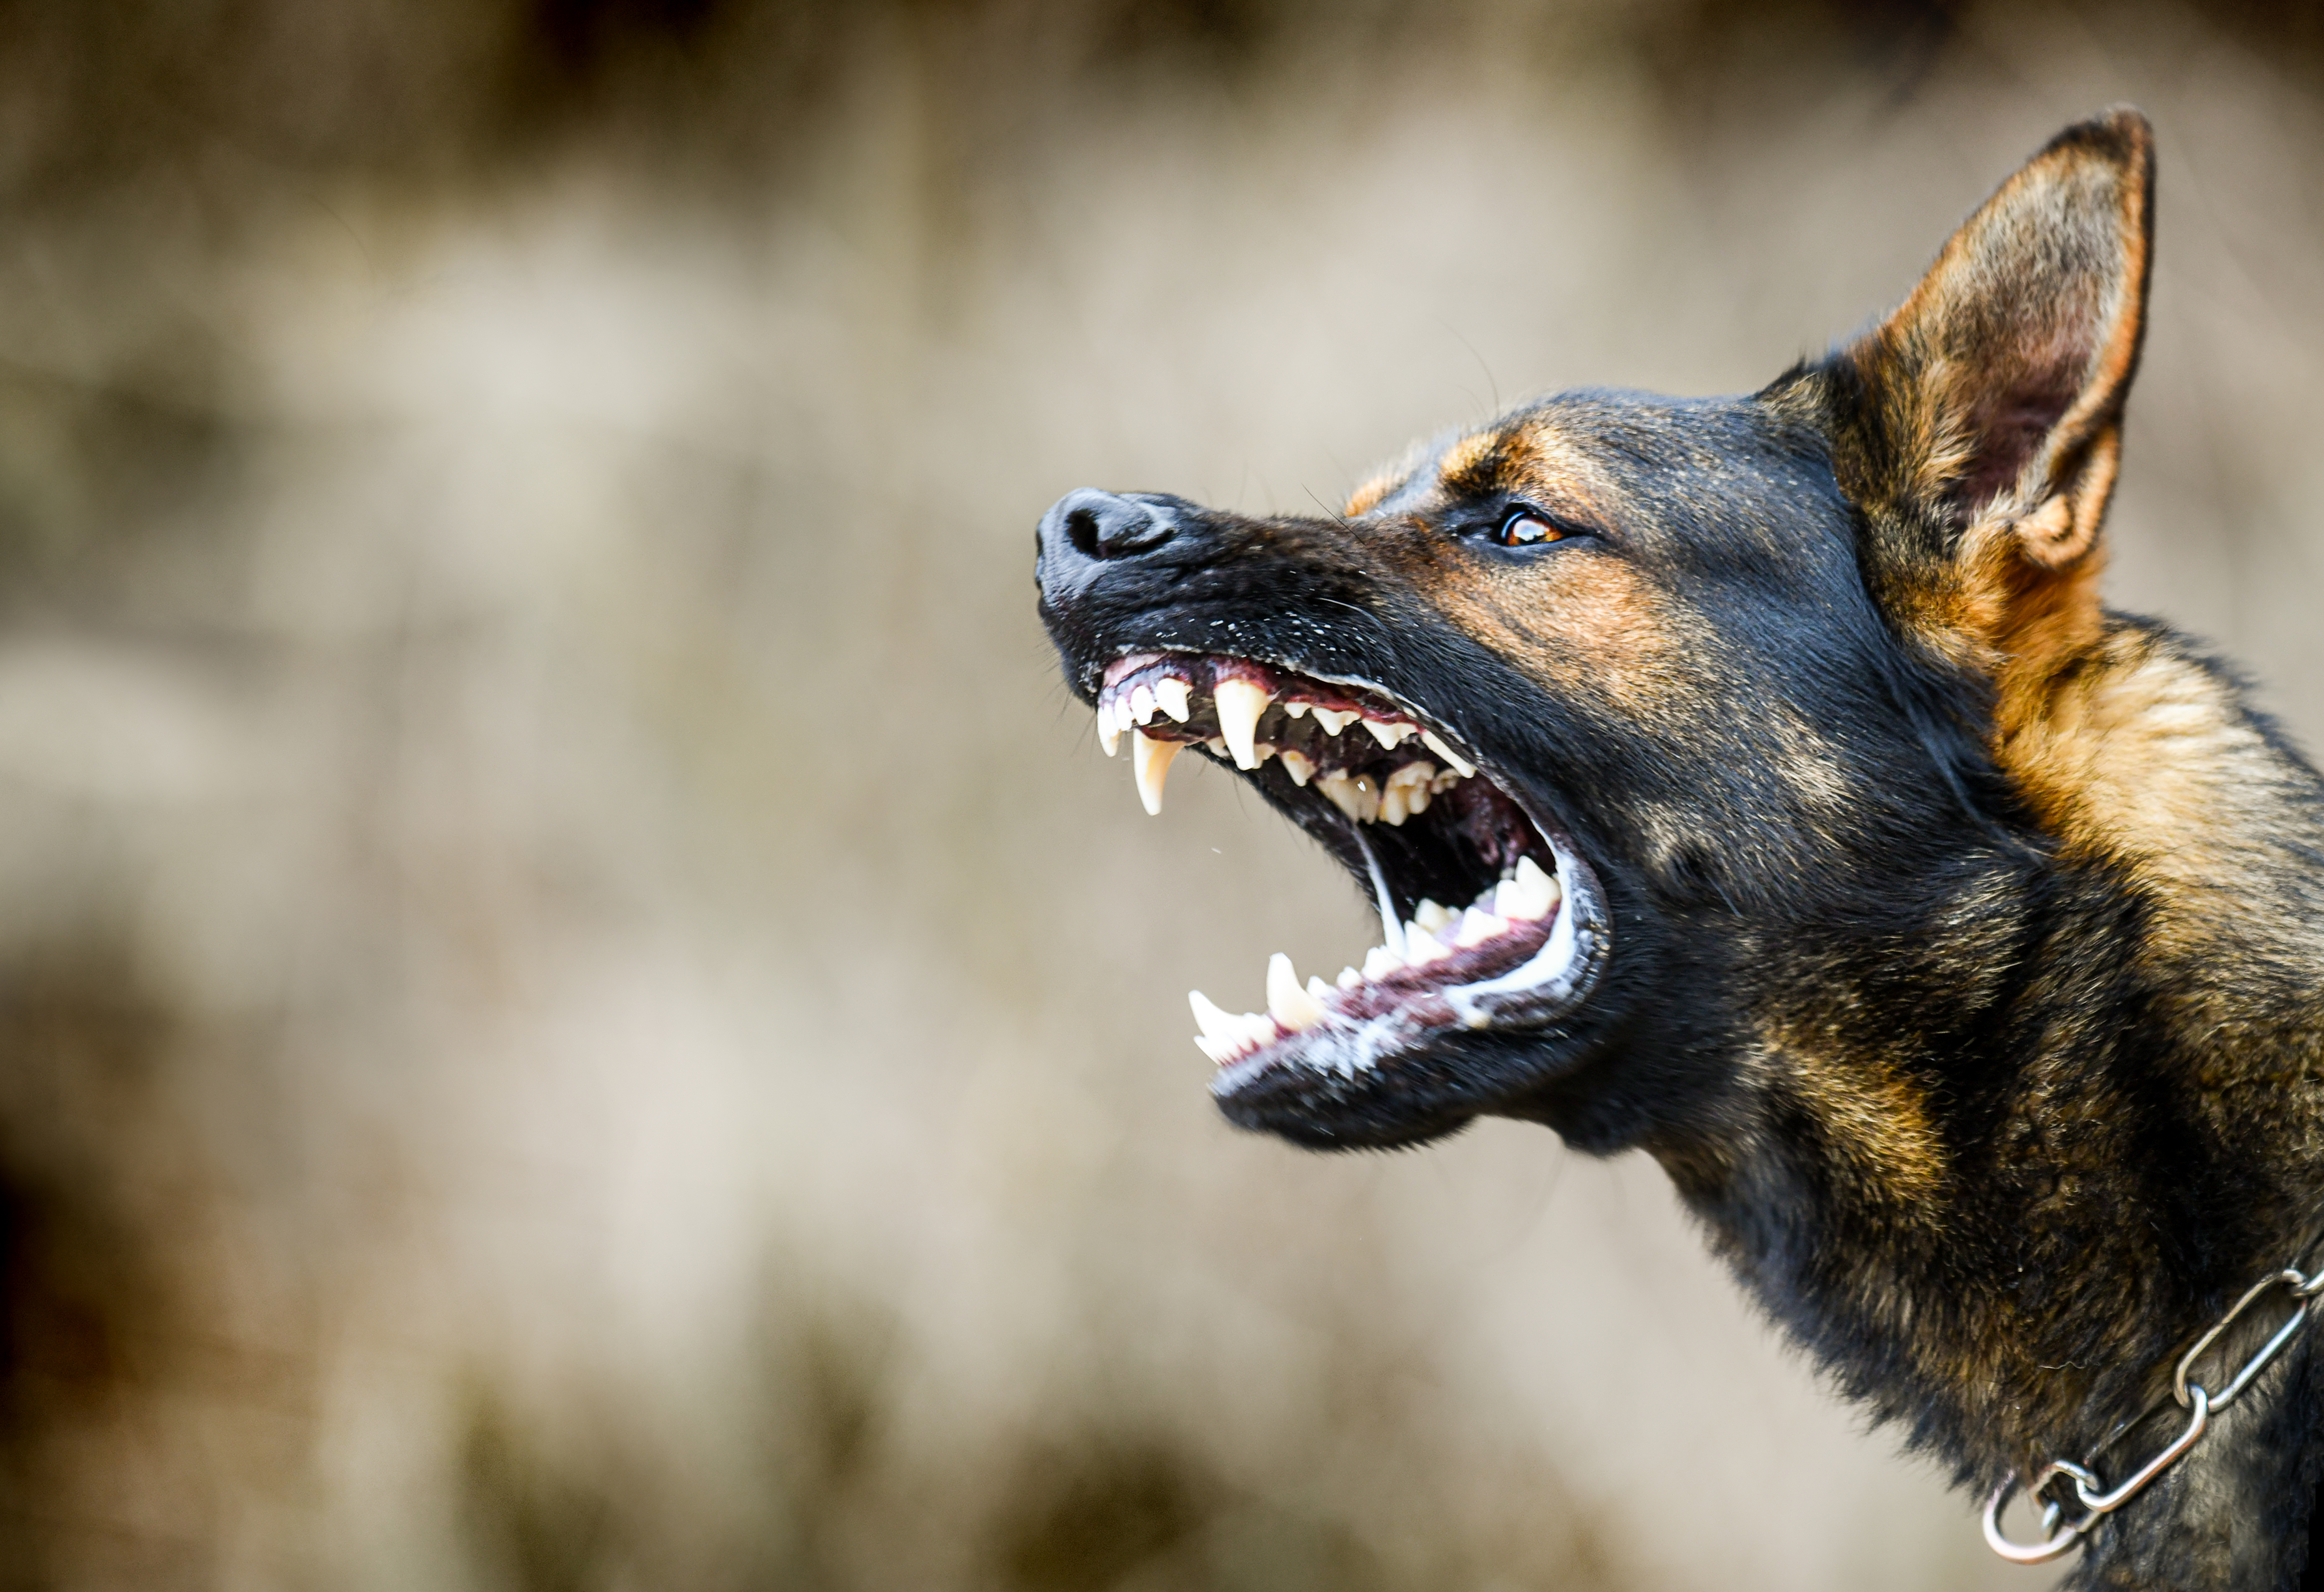 Aggressive dog | Source: Shutterstock